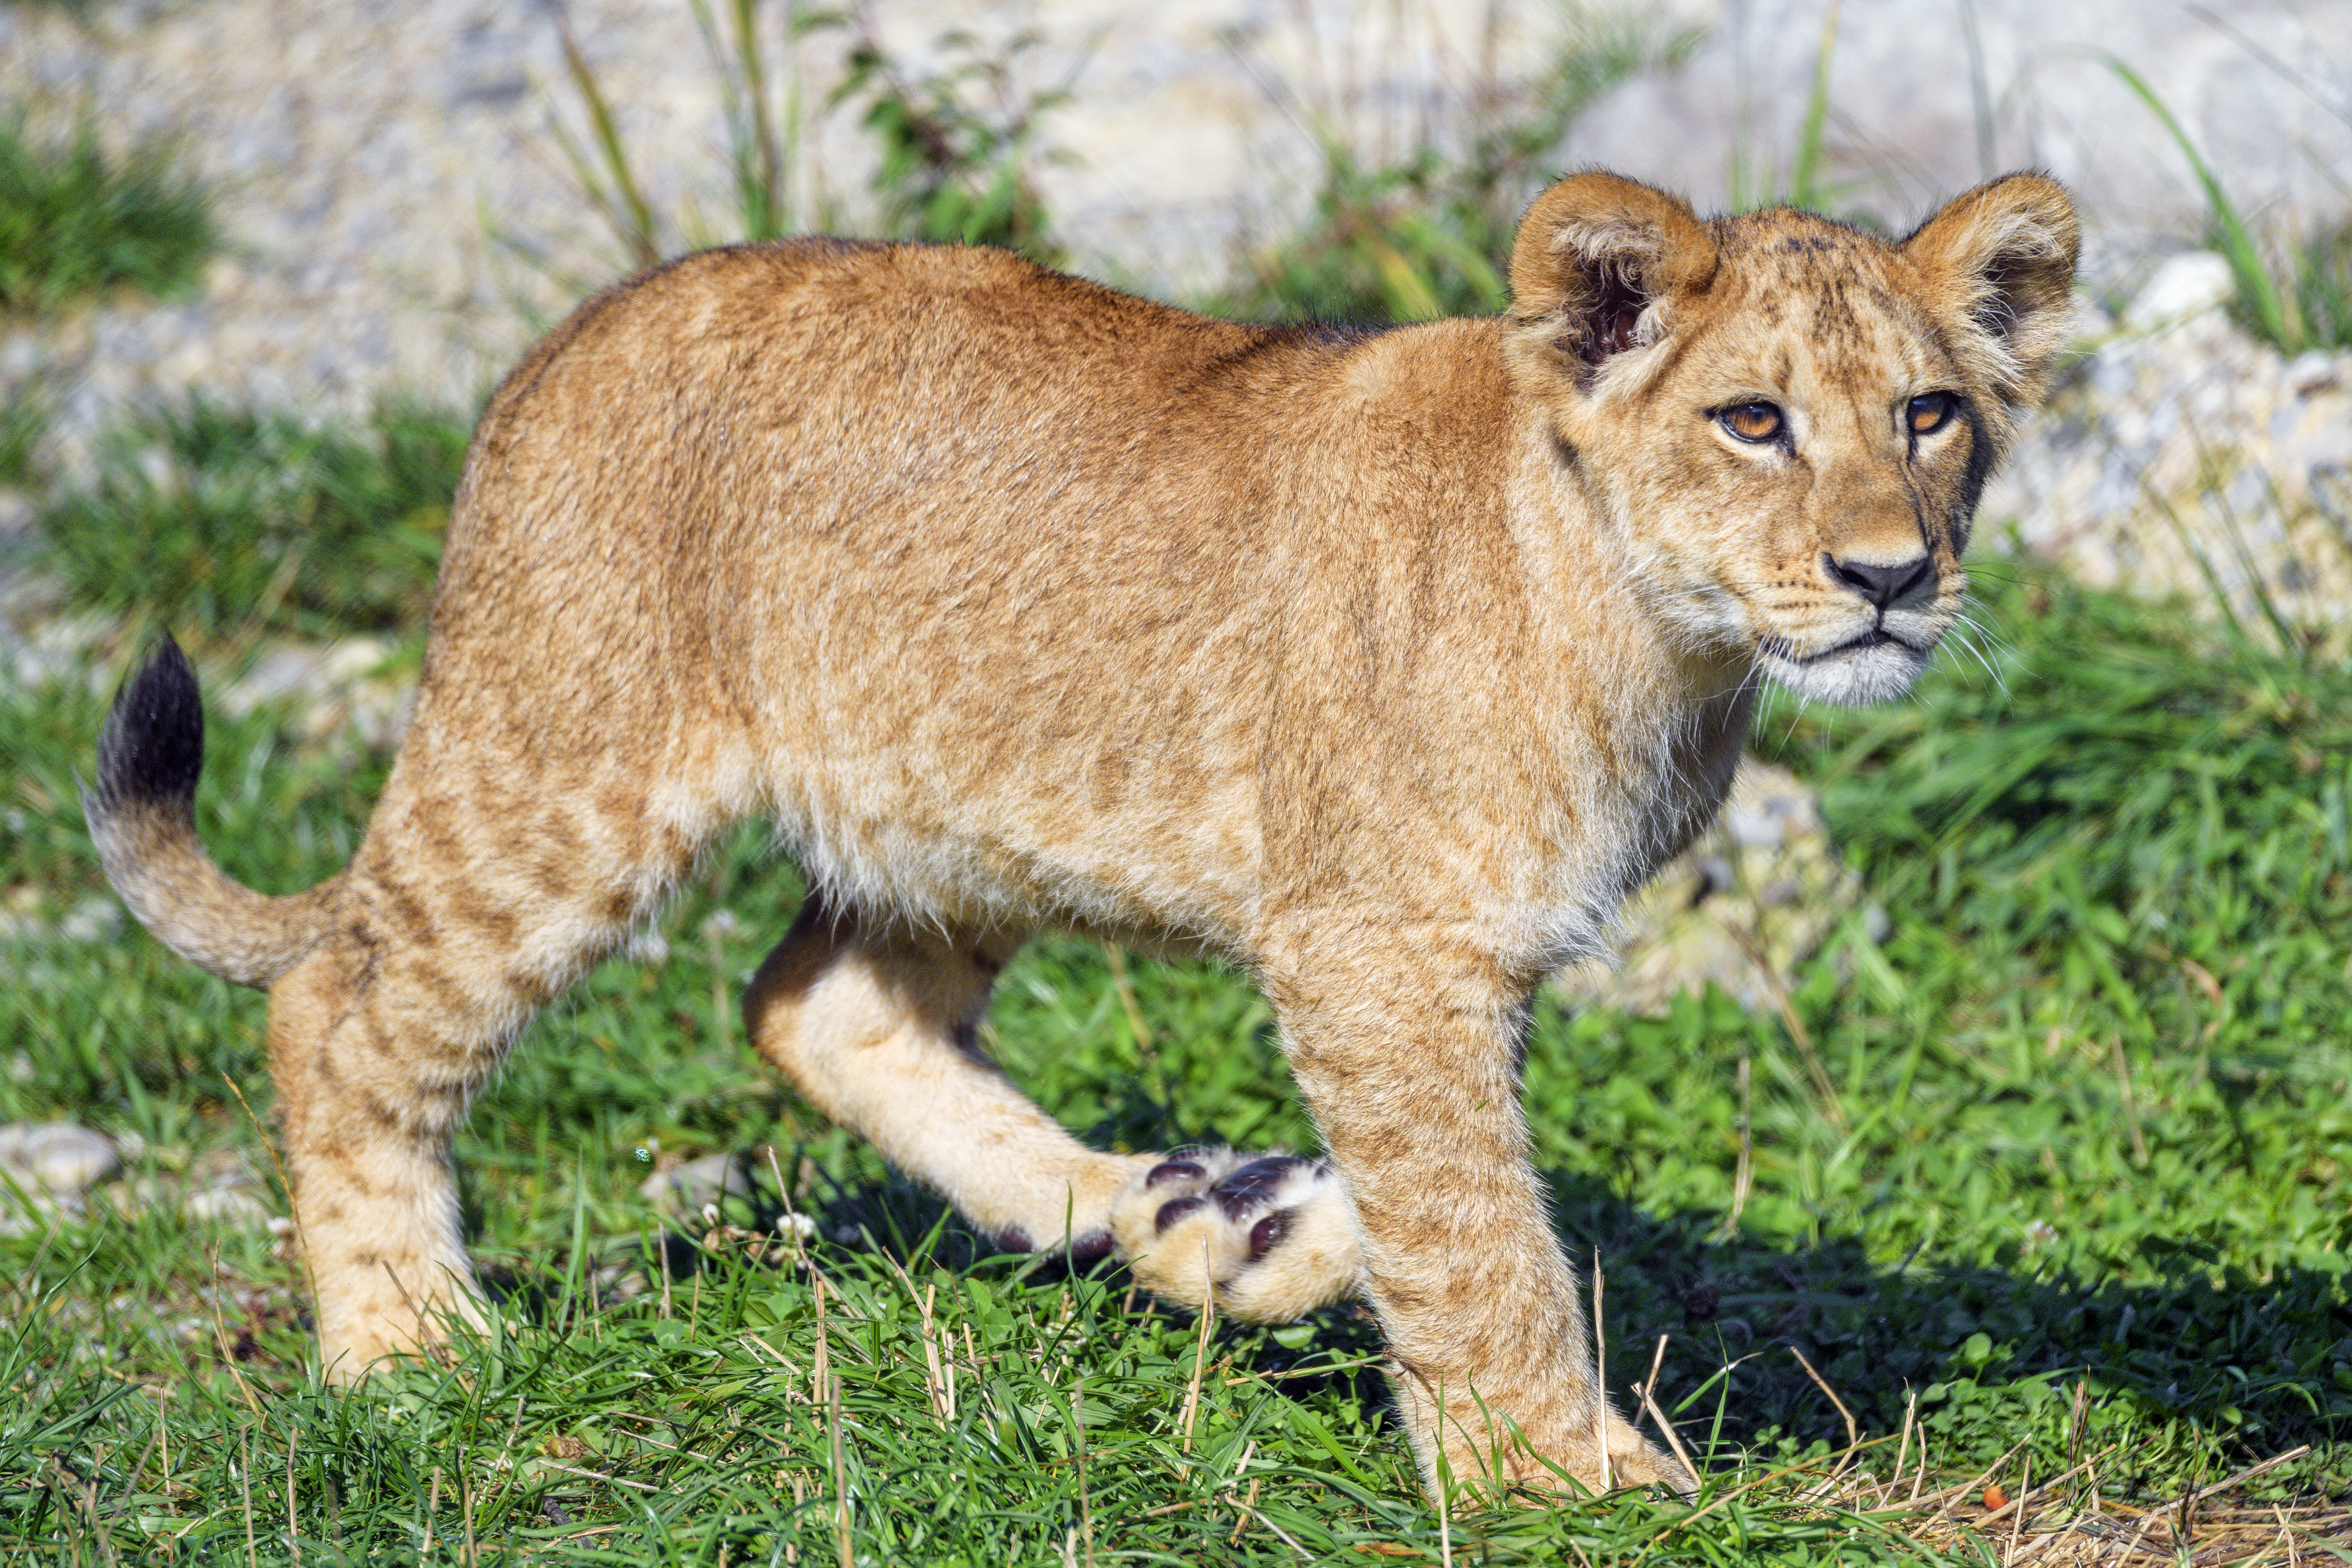 animals, grass, young, lion, predator, joey, lion cub